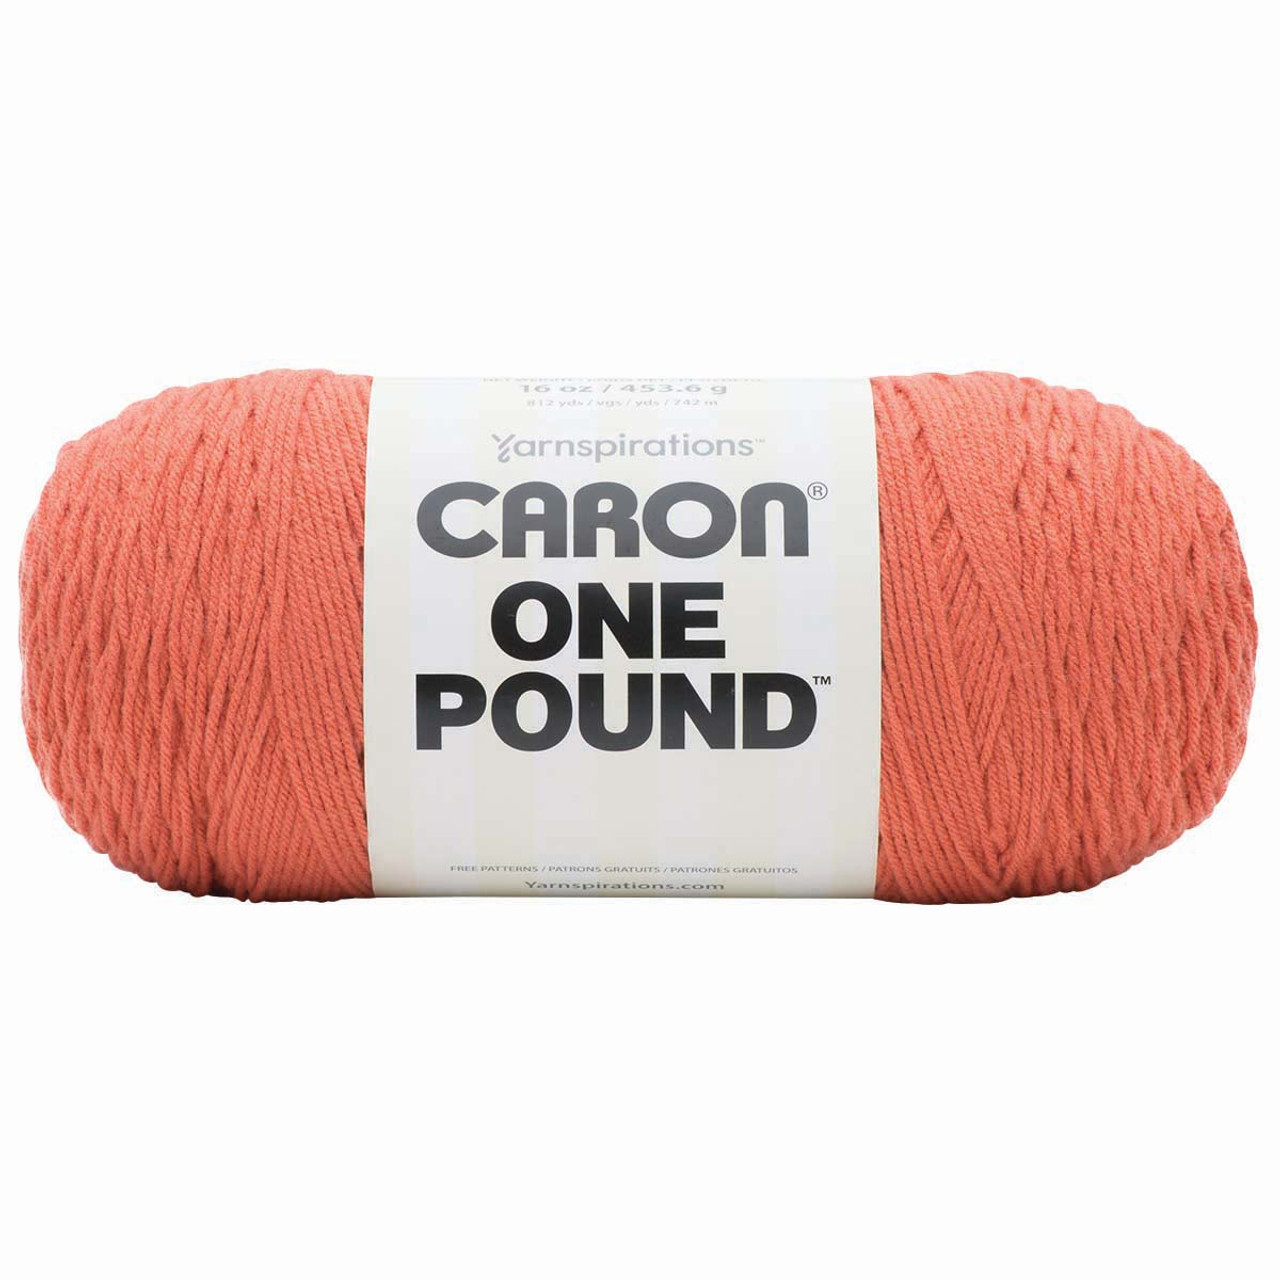 Caron One Pound Solids Yarn, 16oz, Gauge 4 Medium, 100% Acrylic - Black-  For Crochet, Knitting & Crafting ( 1 Piece )